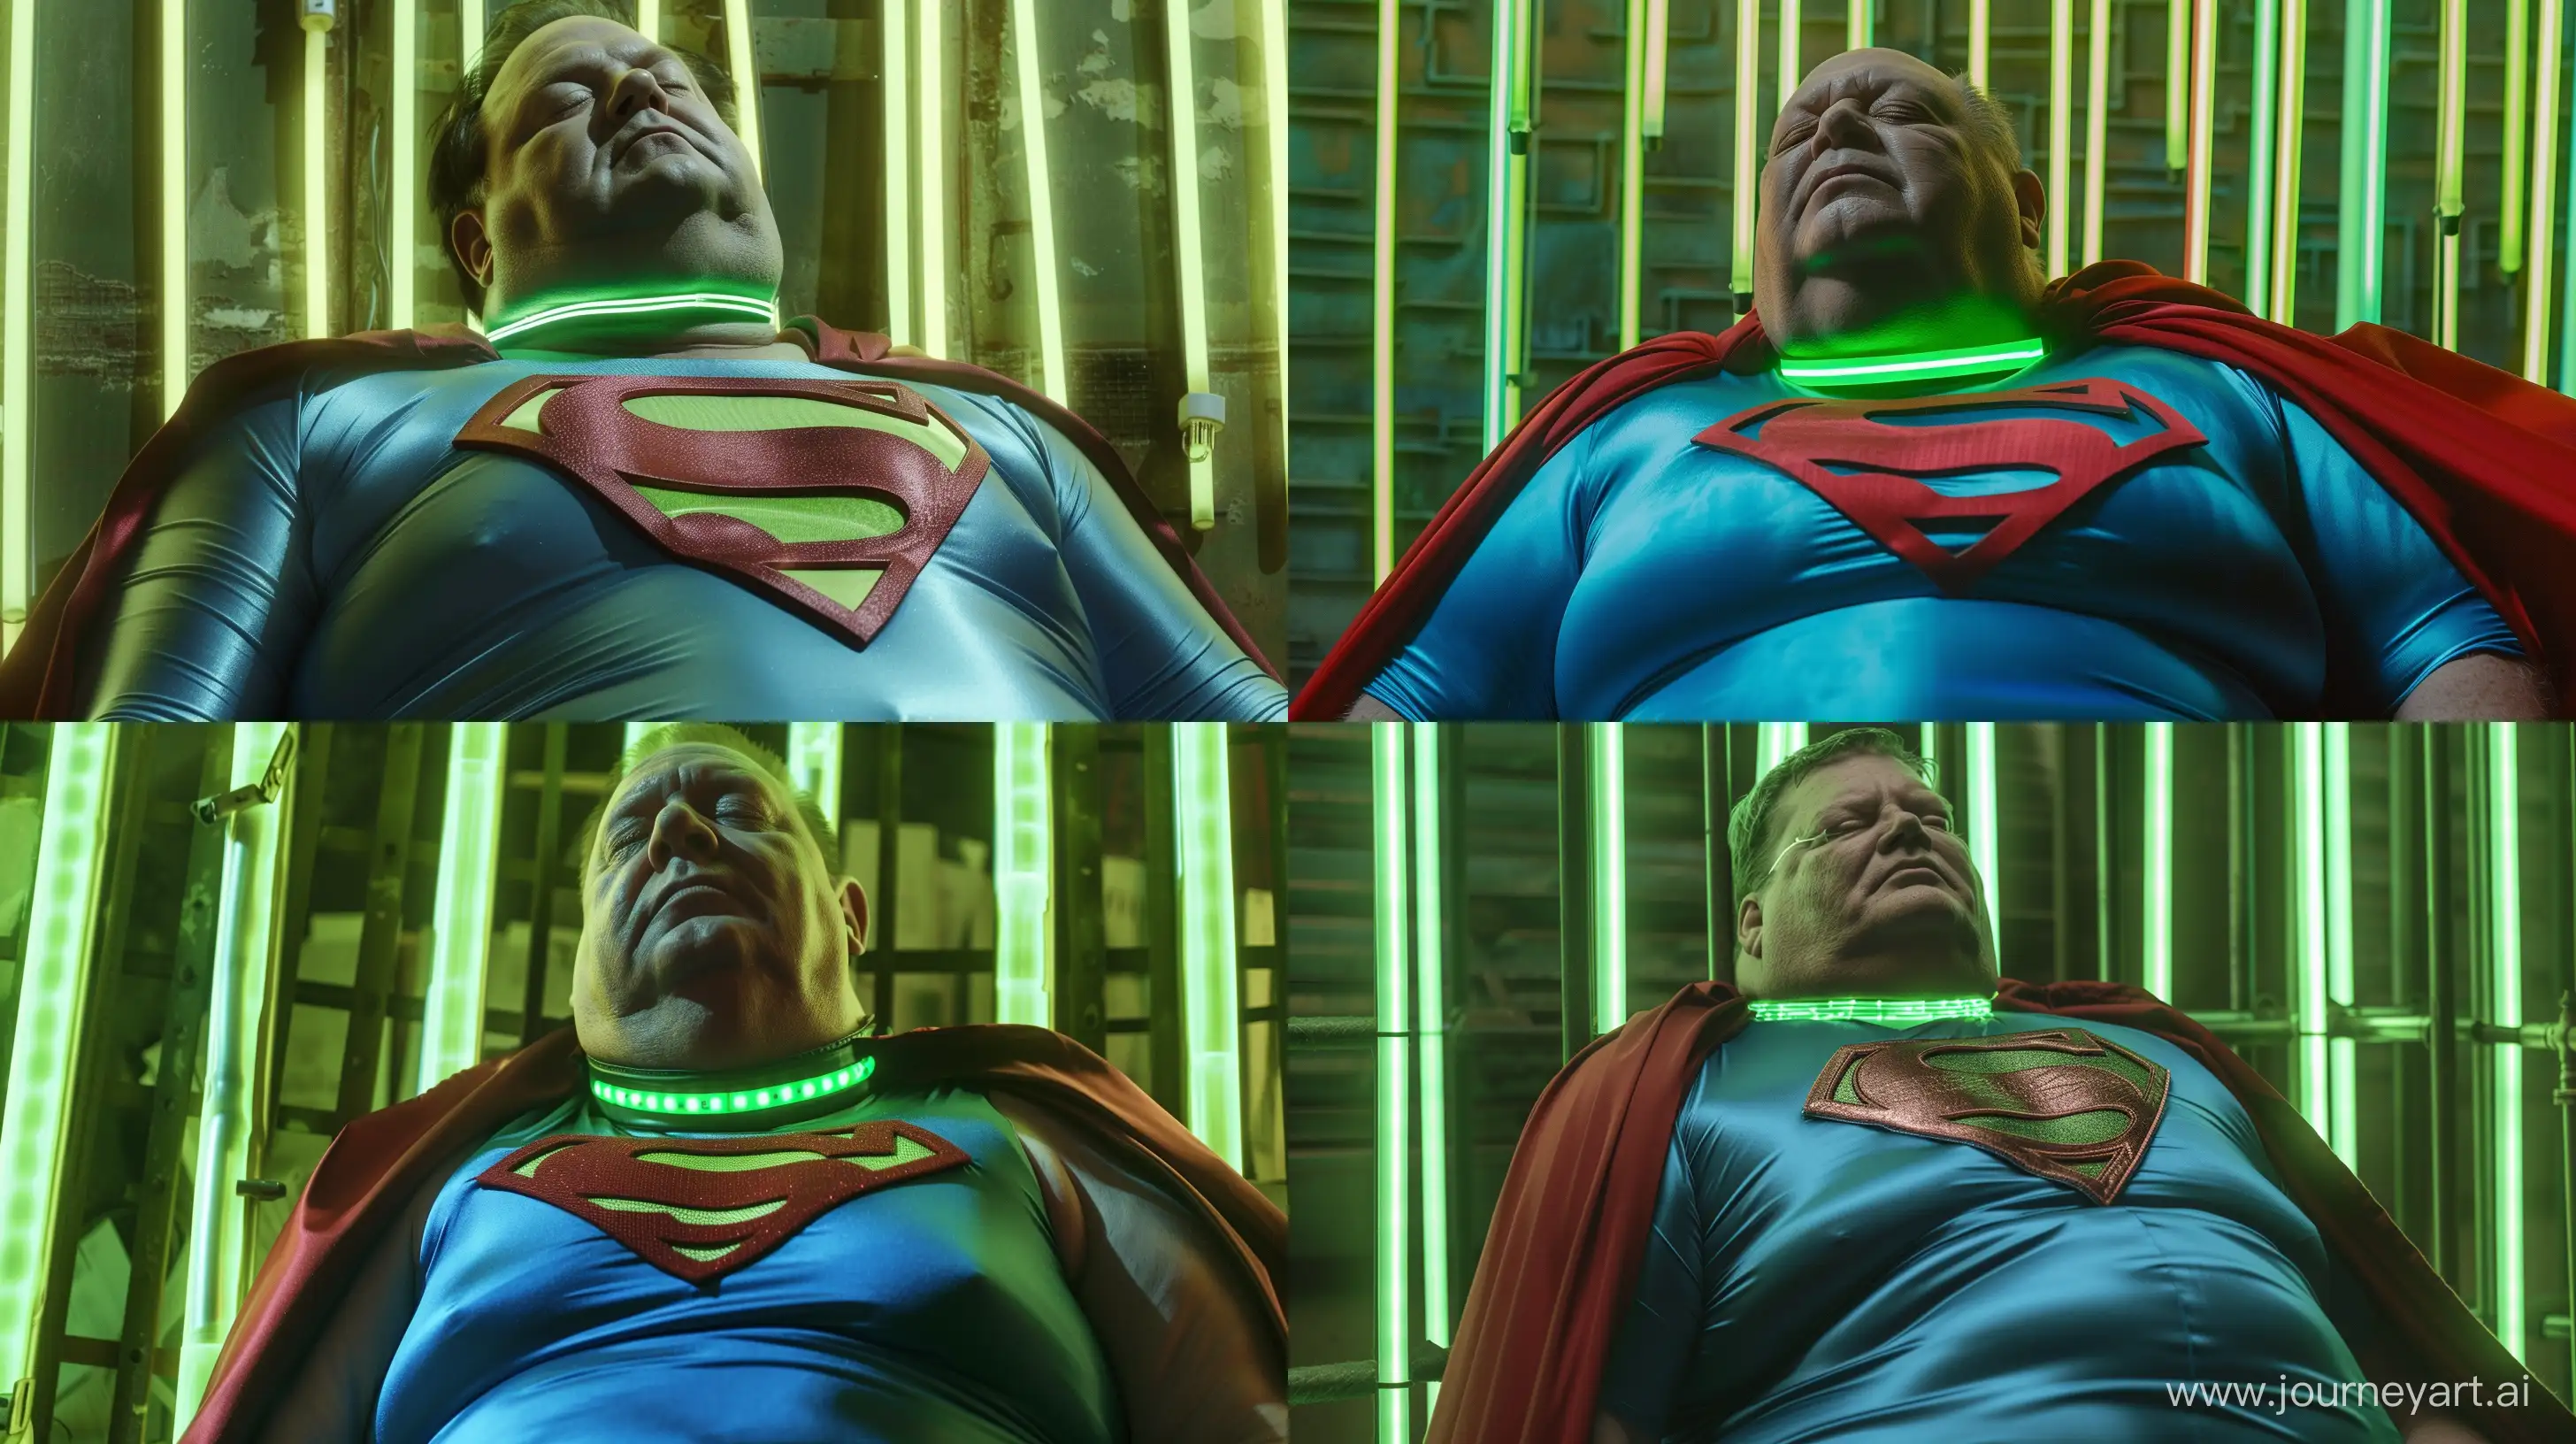 Elderly-Man-in-Superman-Costume-Sleeping-Against-Neon-Bars-Outdoors